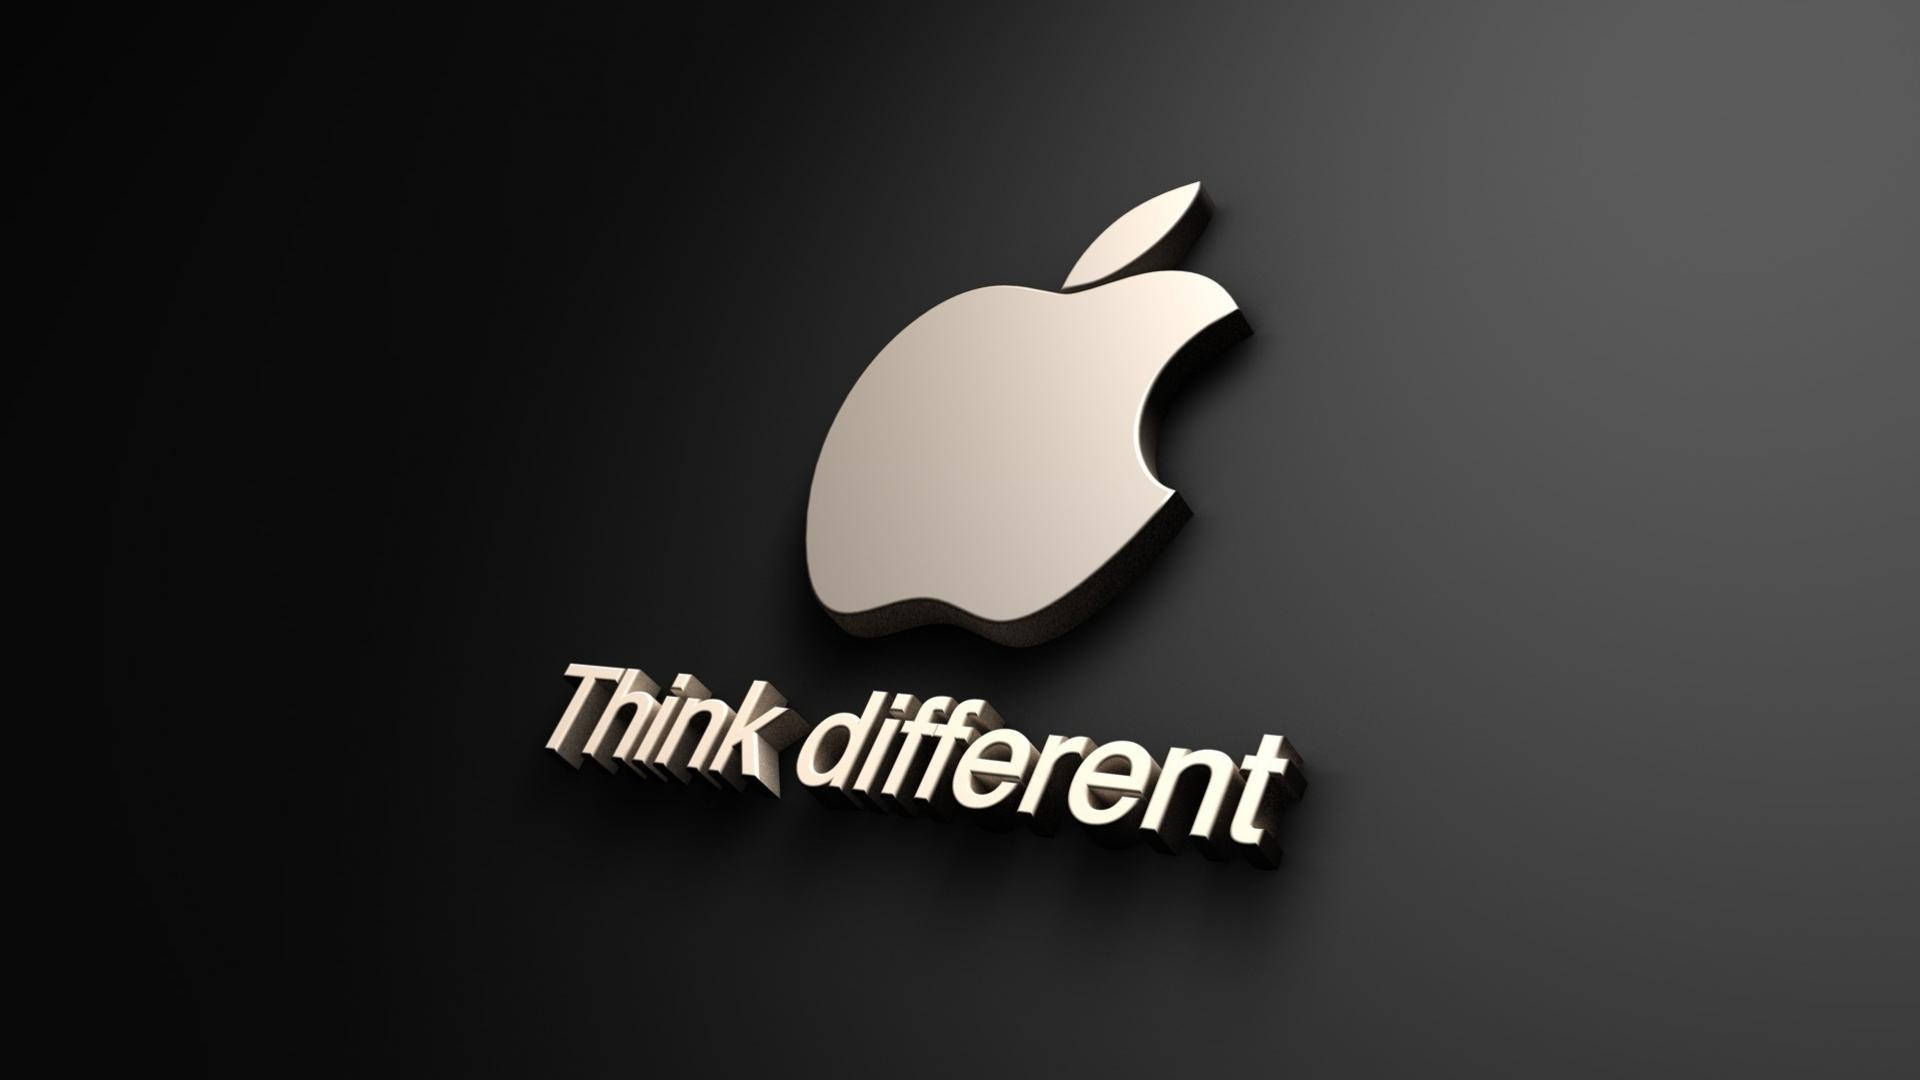 Digital Art Of Apple Logo 4k Background